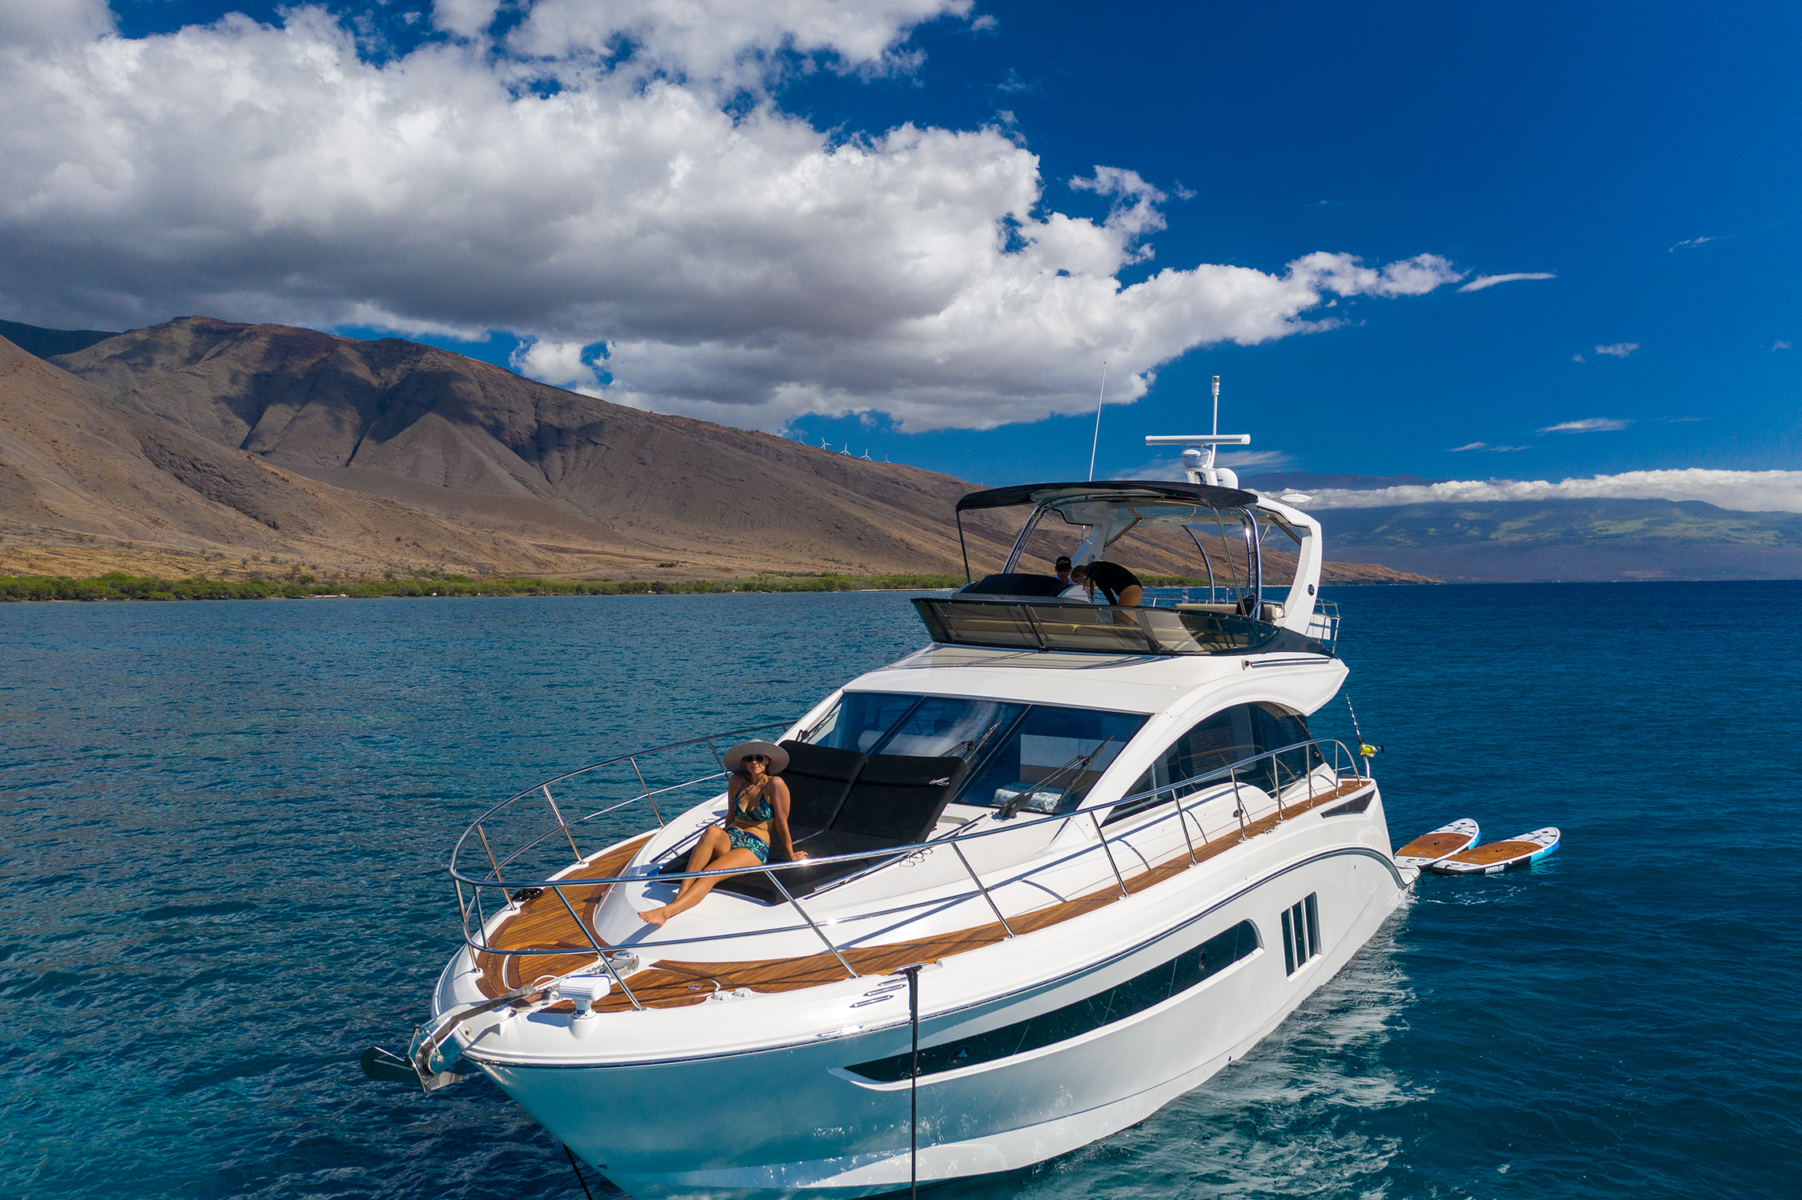 luxurious power yacht snorkeling, fishing, sightseeing